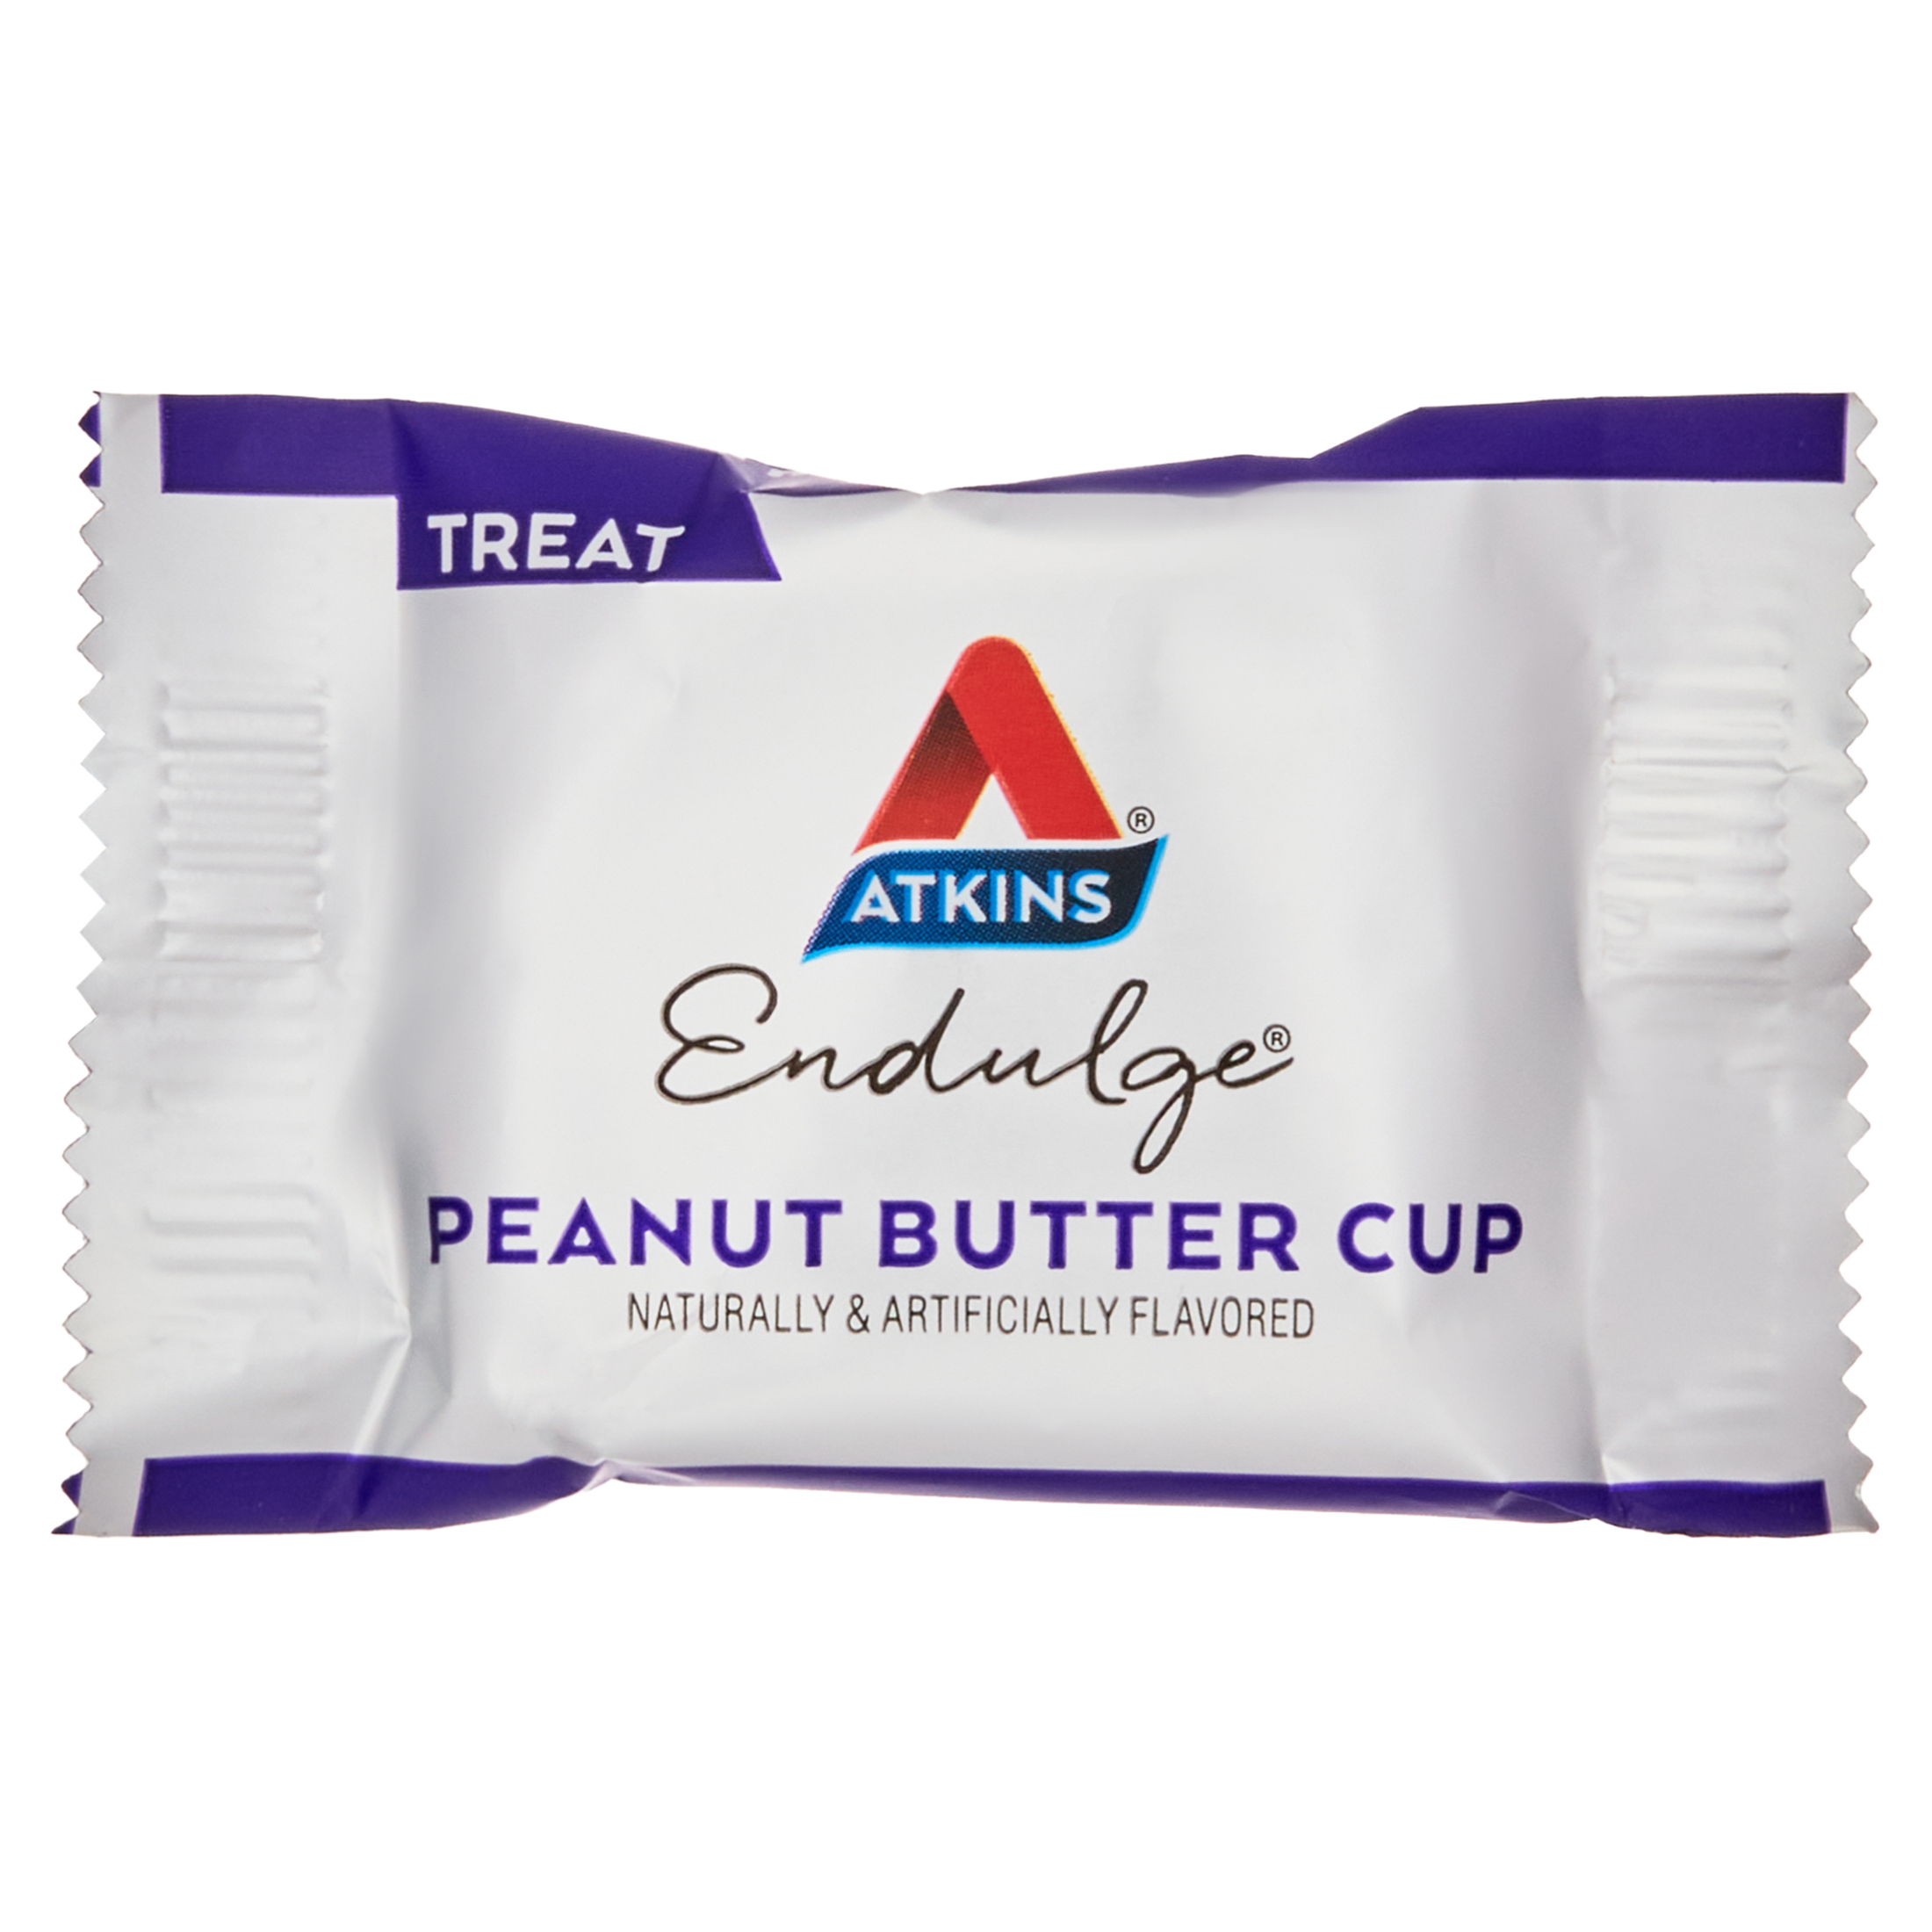 Atkins Endulge Peanut Butter Cups, Dessert Favorite, Low Carb, Low Sugar, 10 Ct - image 2 of 7